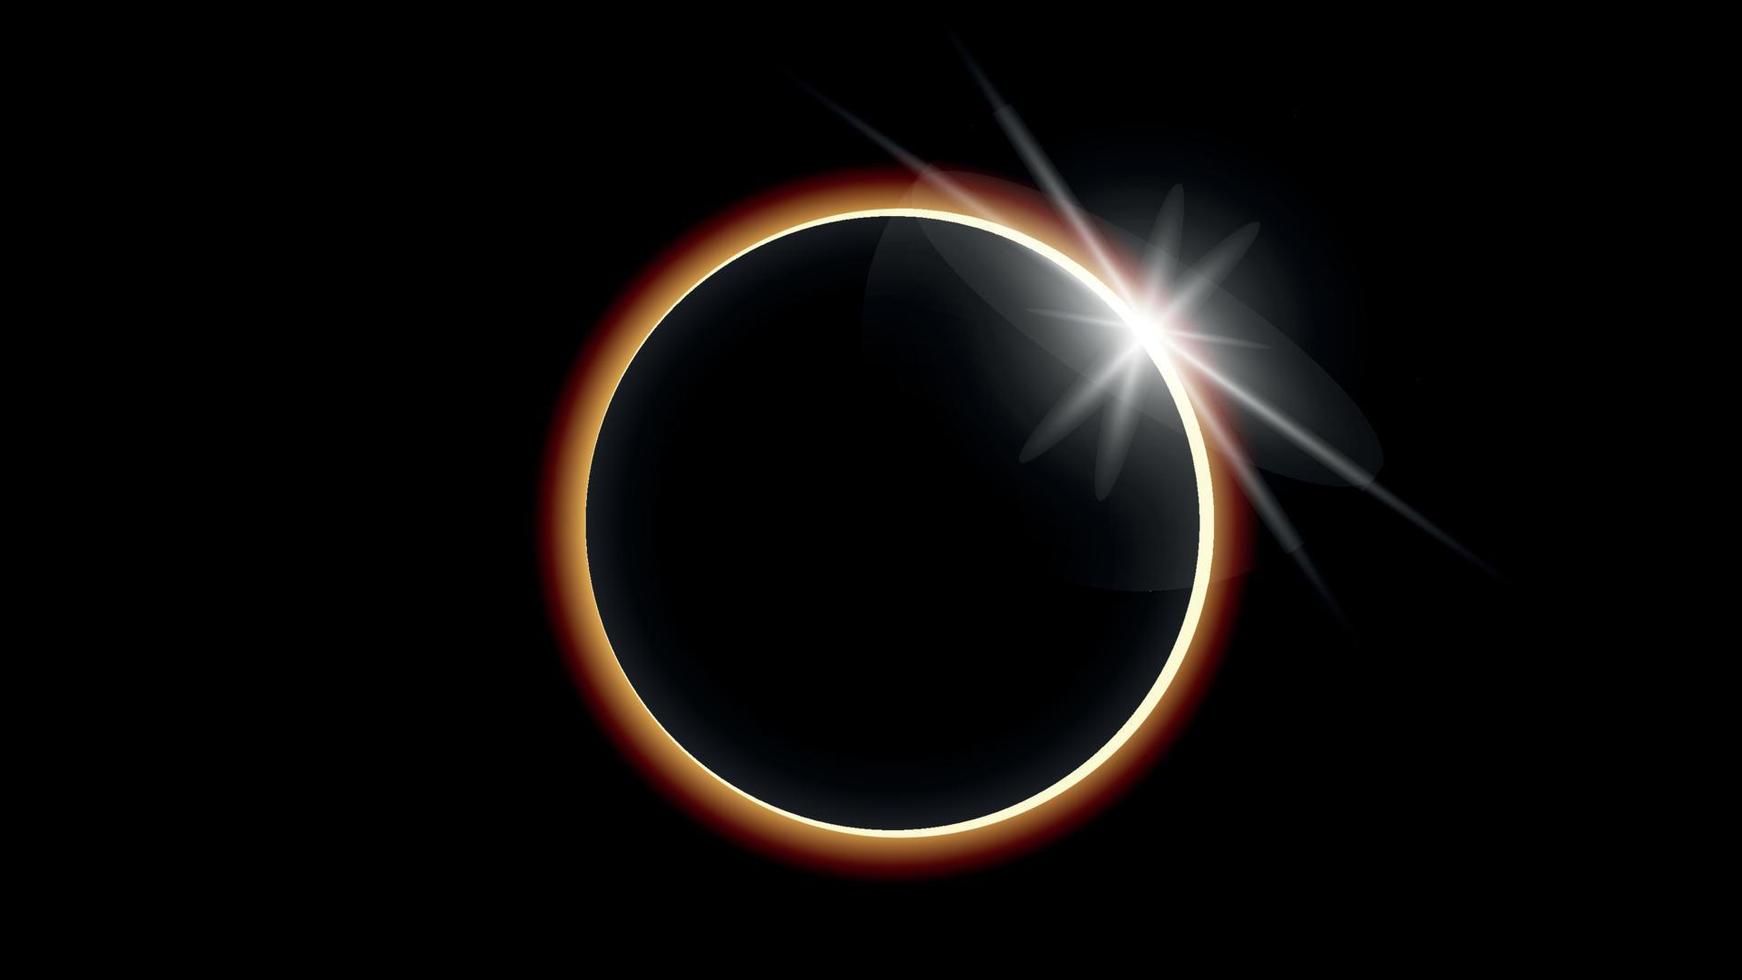 Sun eclipse vector illustration background